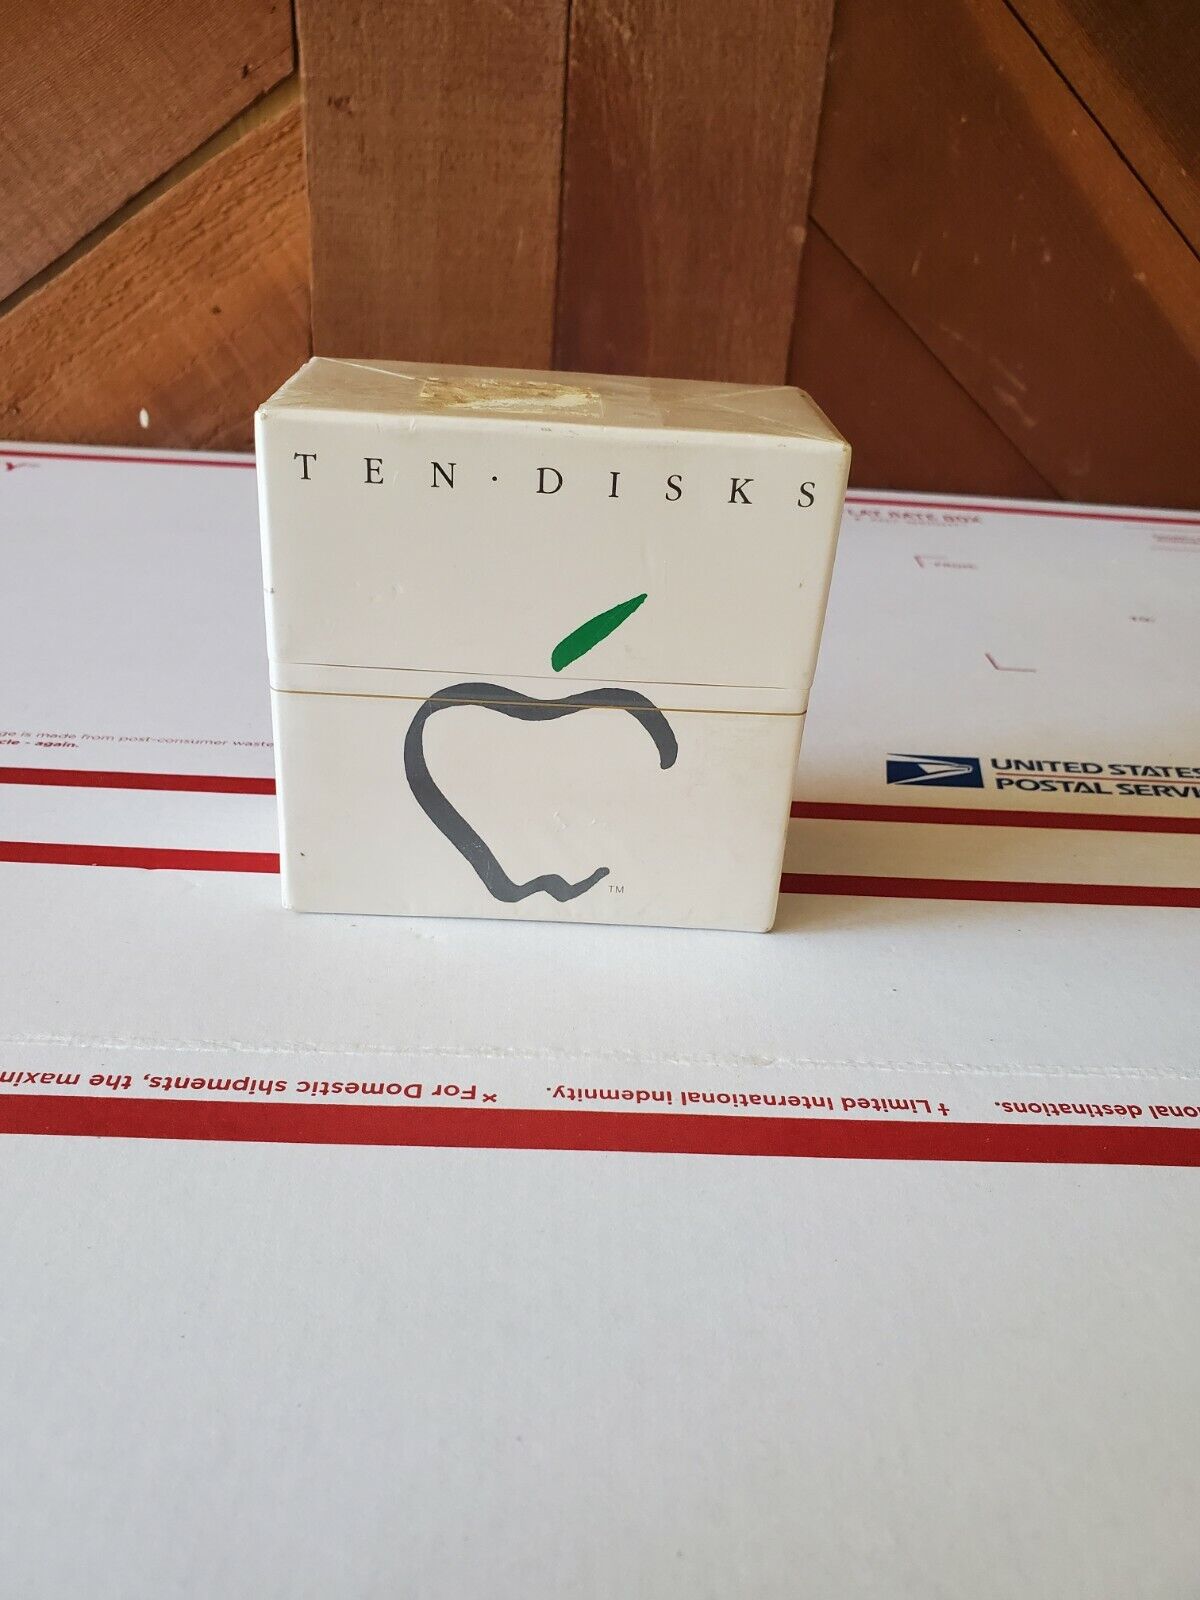 NOS Apple Macintosh 3.5